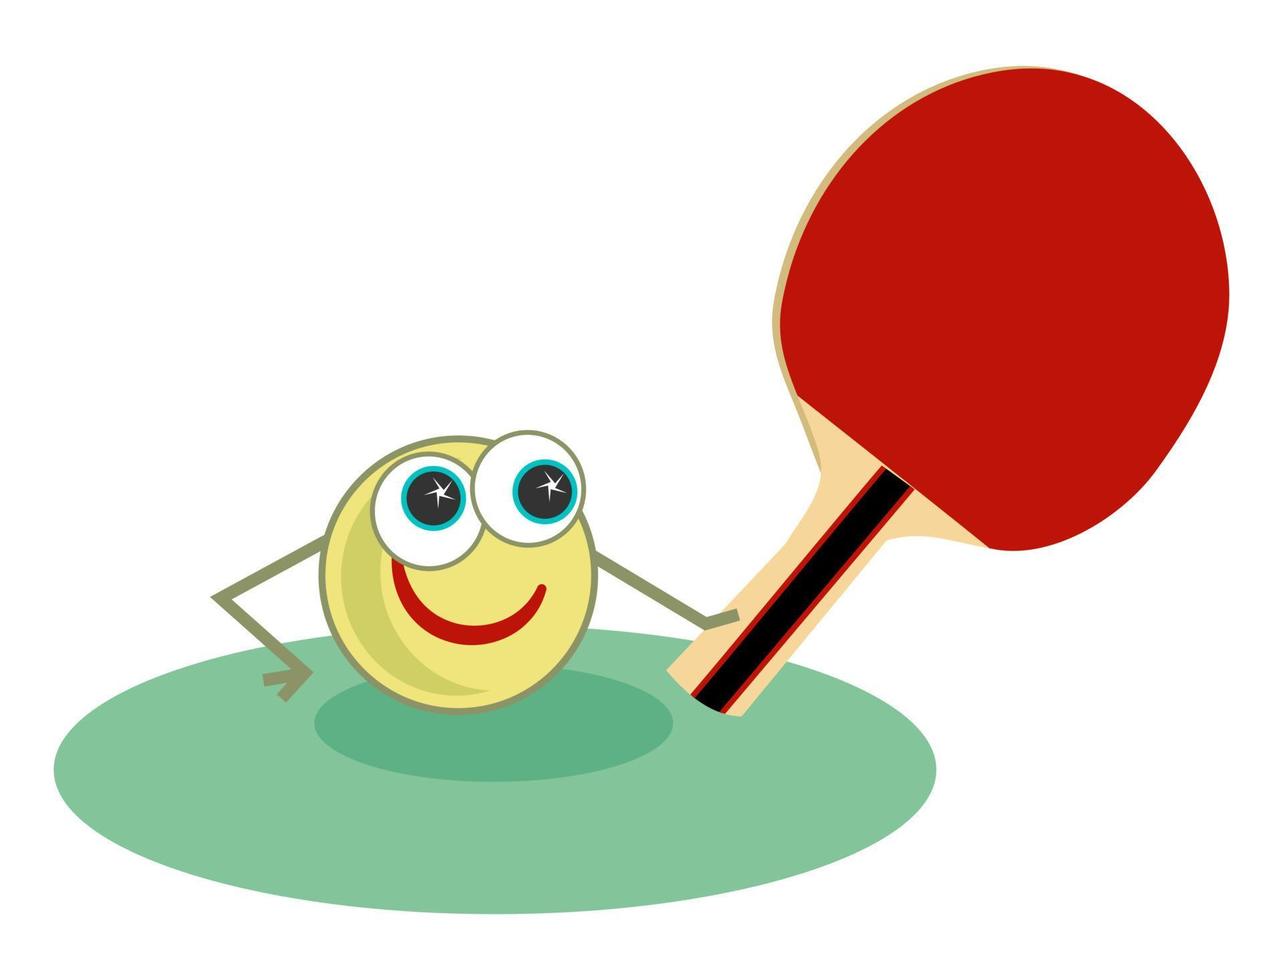 pallina da ping pong divertente cartone animato che gioca a ping pong vettore